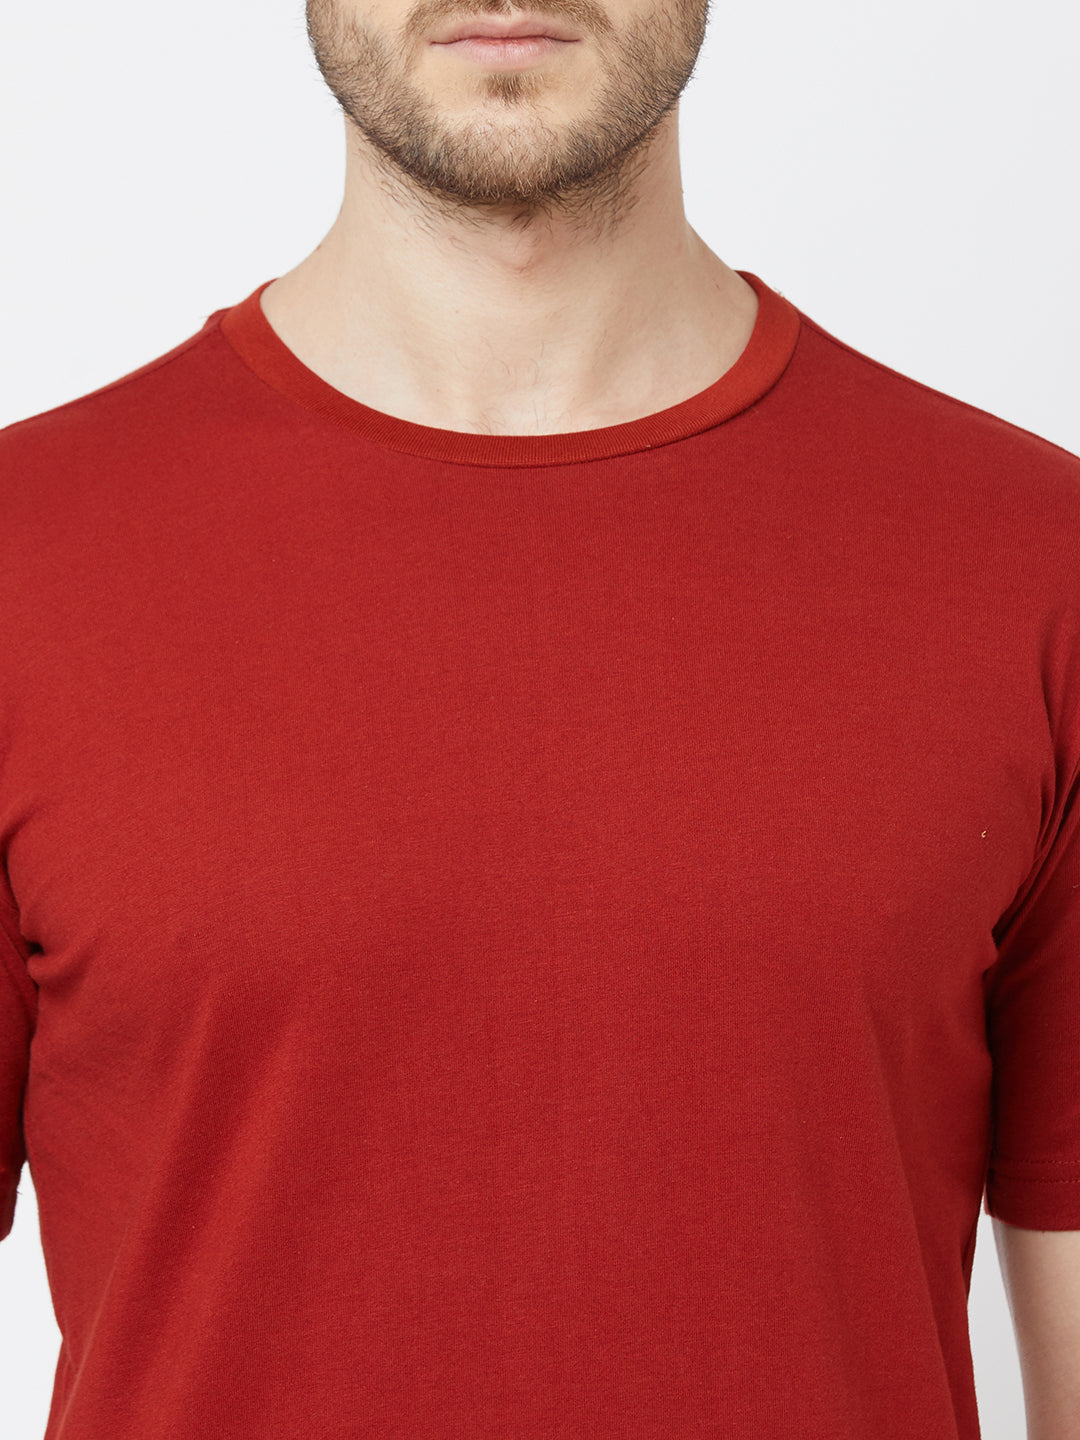 Basic Brick Red T-Shirt